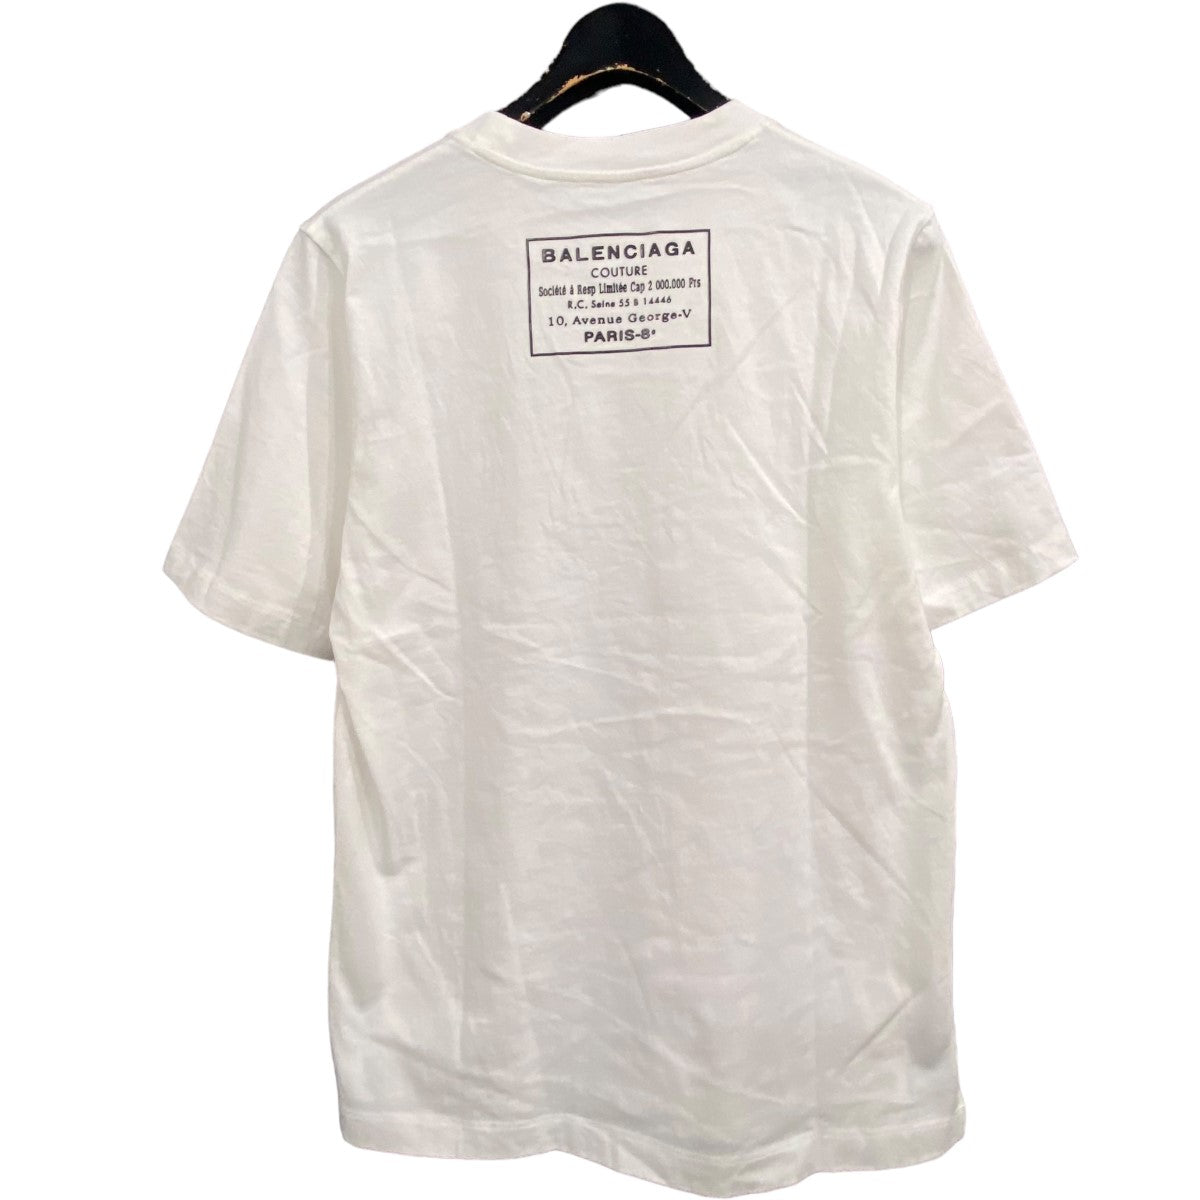 BALENCIAGA(バレンシアガ) バックパッチTシャツ 496052 ホワイト 